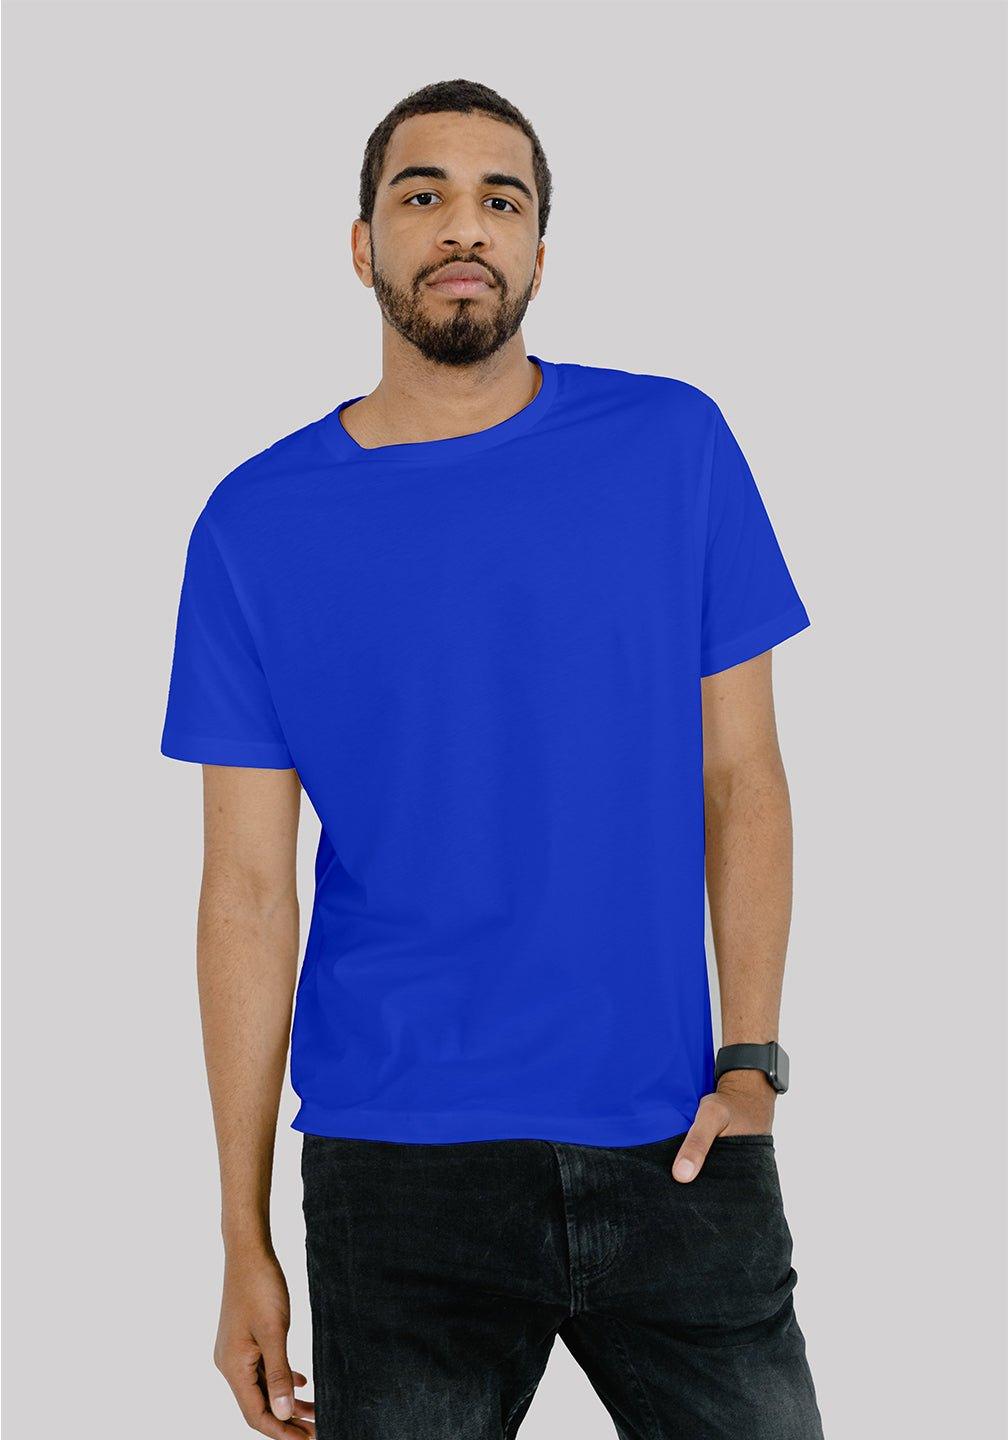 Solid Plain T Shirt For Men In Navy Blue Colour Variant